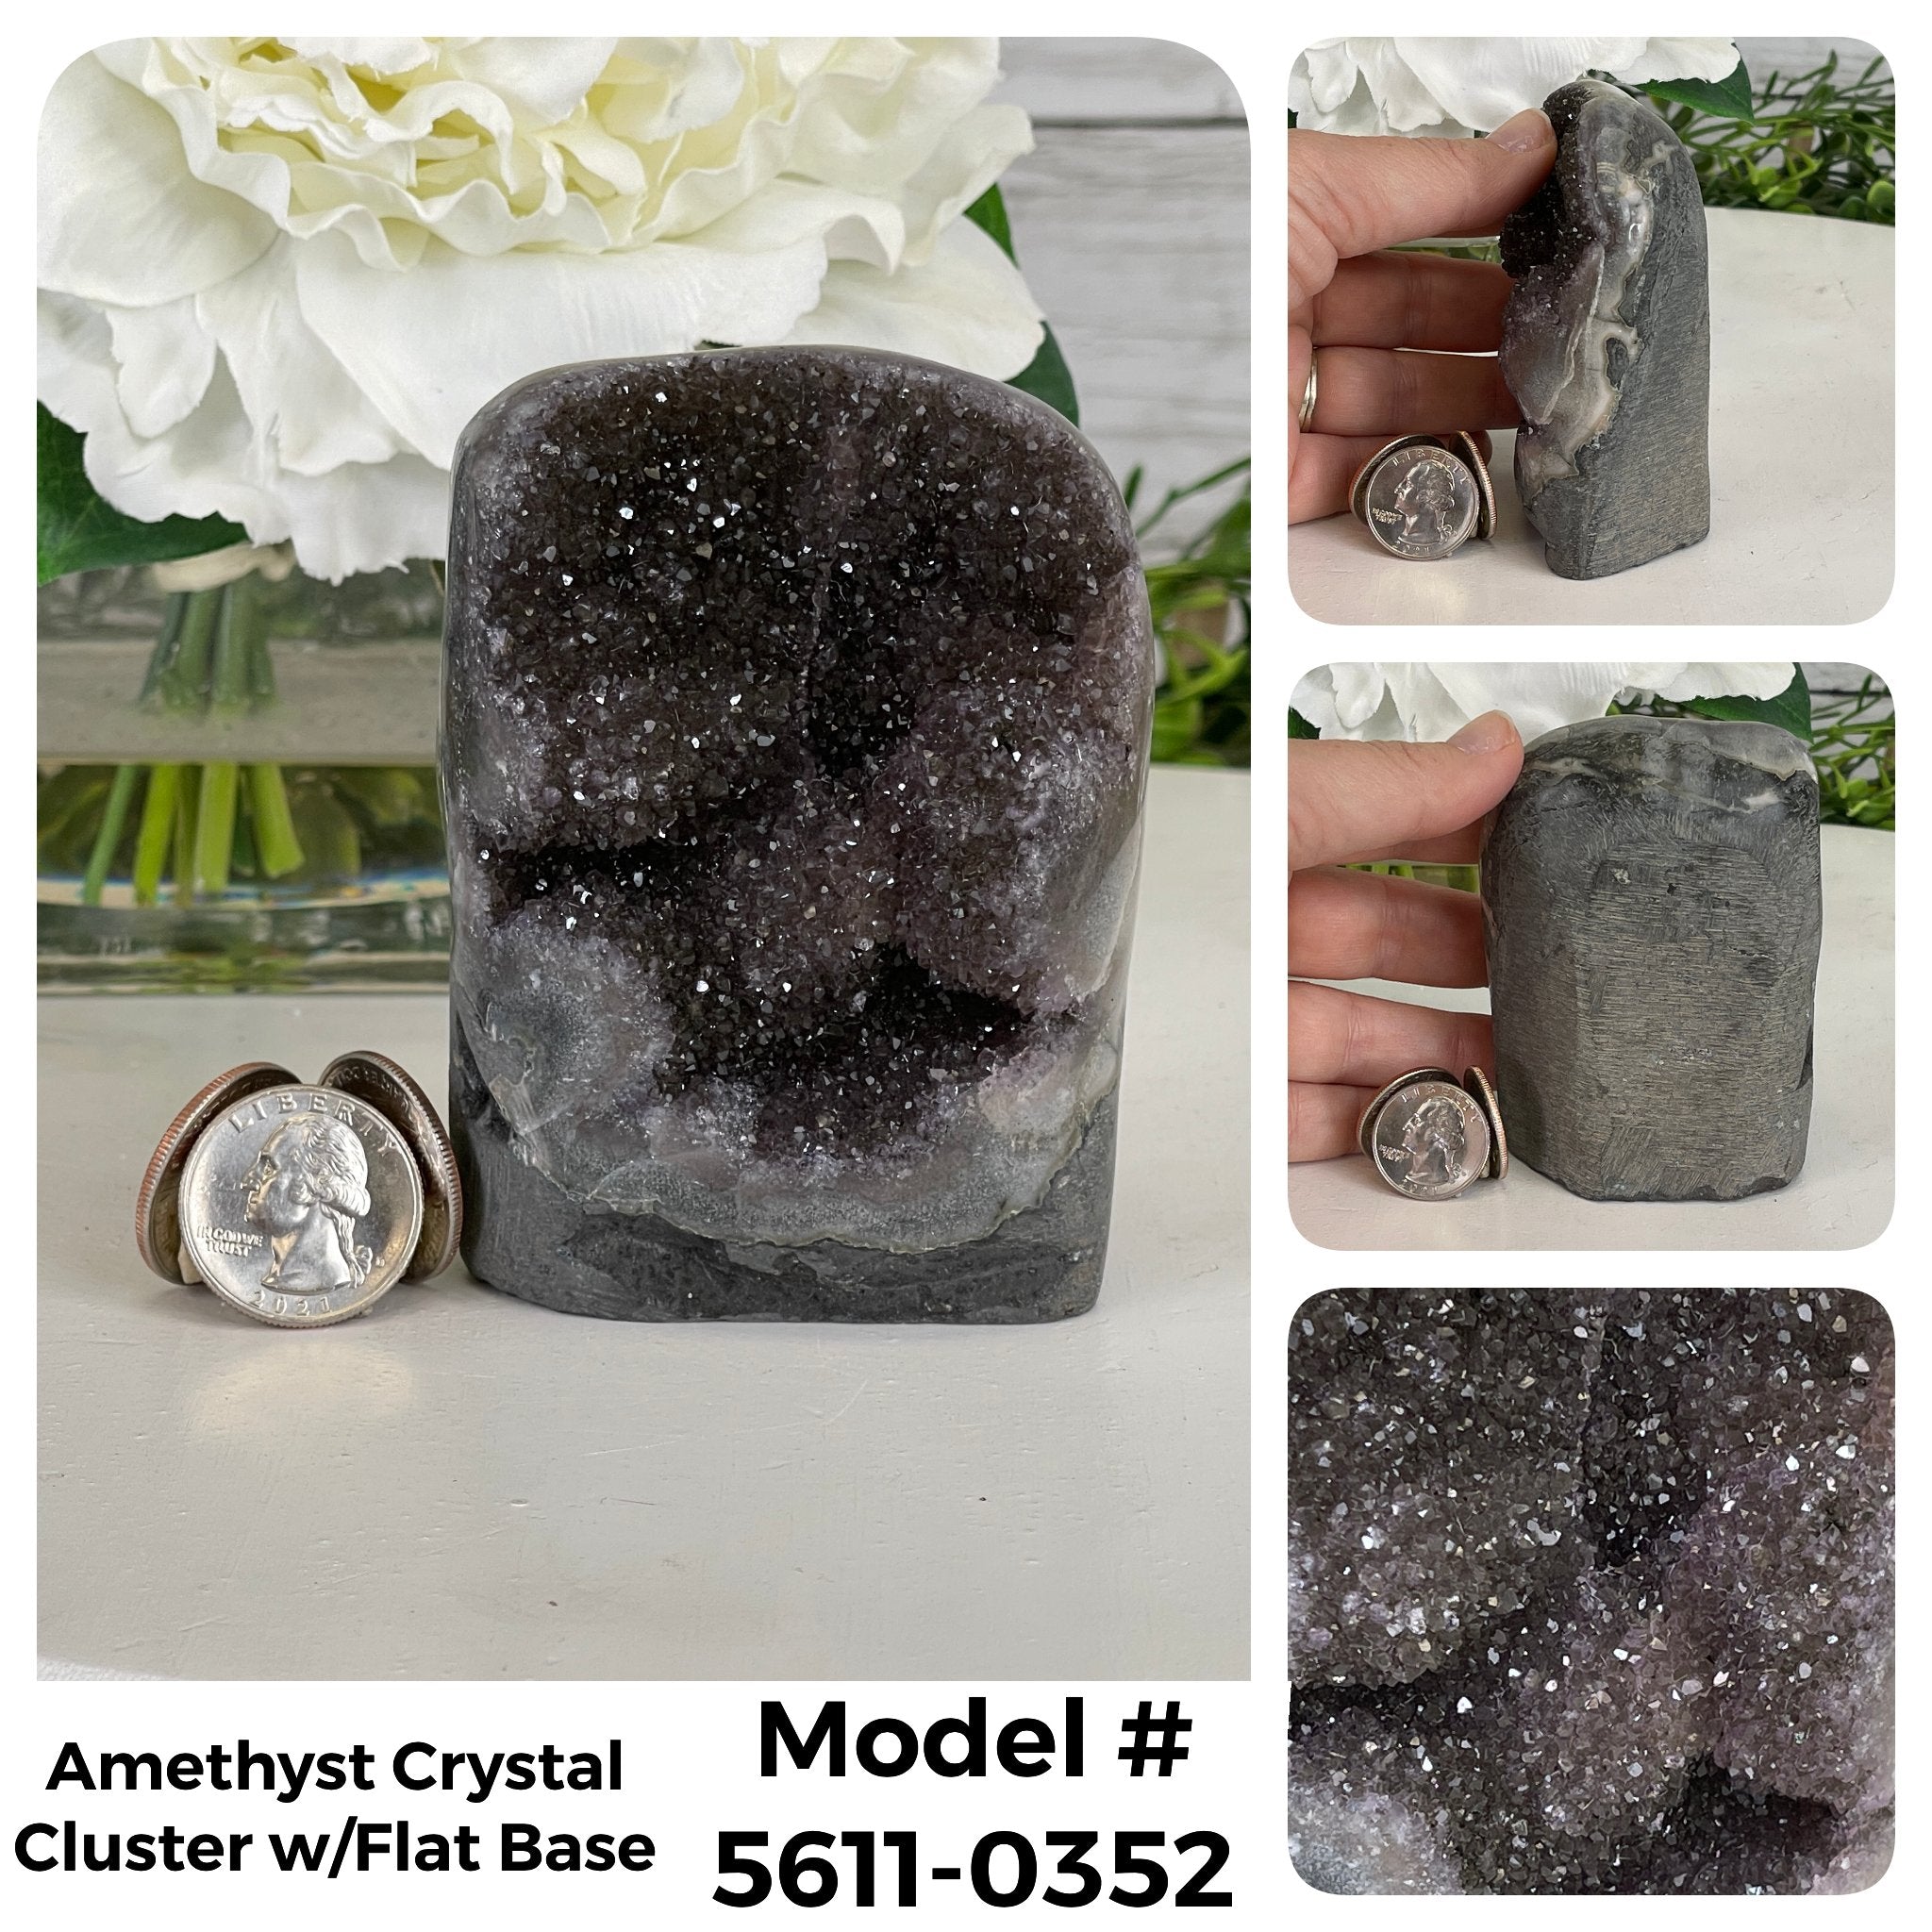 Small Extra Quality Amethyst Crystal Cluster w/ flat base, Various Options #5611EQ - Brazil GemsBrazil GemsSmall Extra Quality Amethyst Crystal Cluster w/ flat base, Various Options #5611EQSmall Clusters with Flat Bases5611-0352